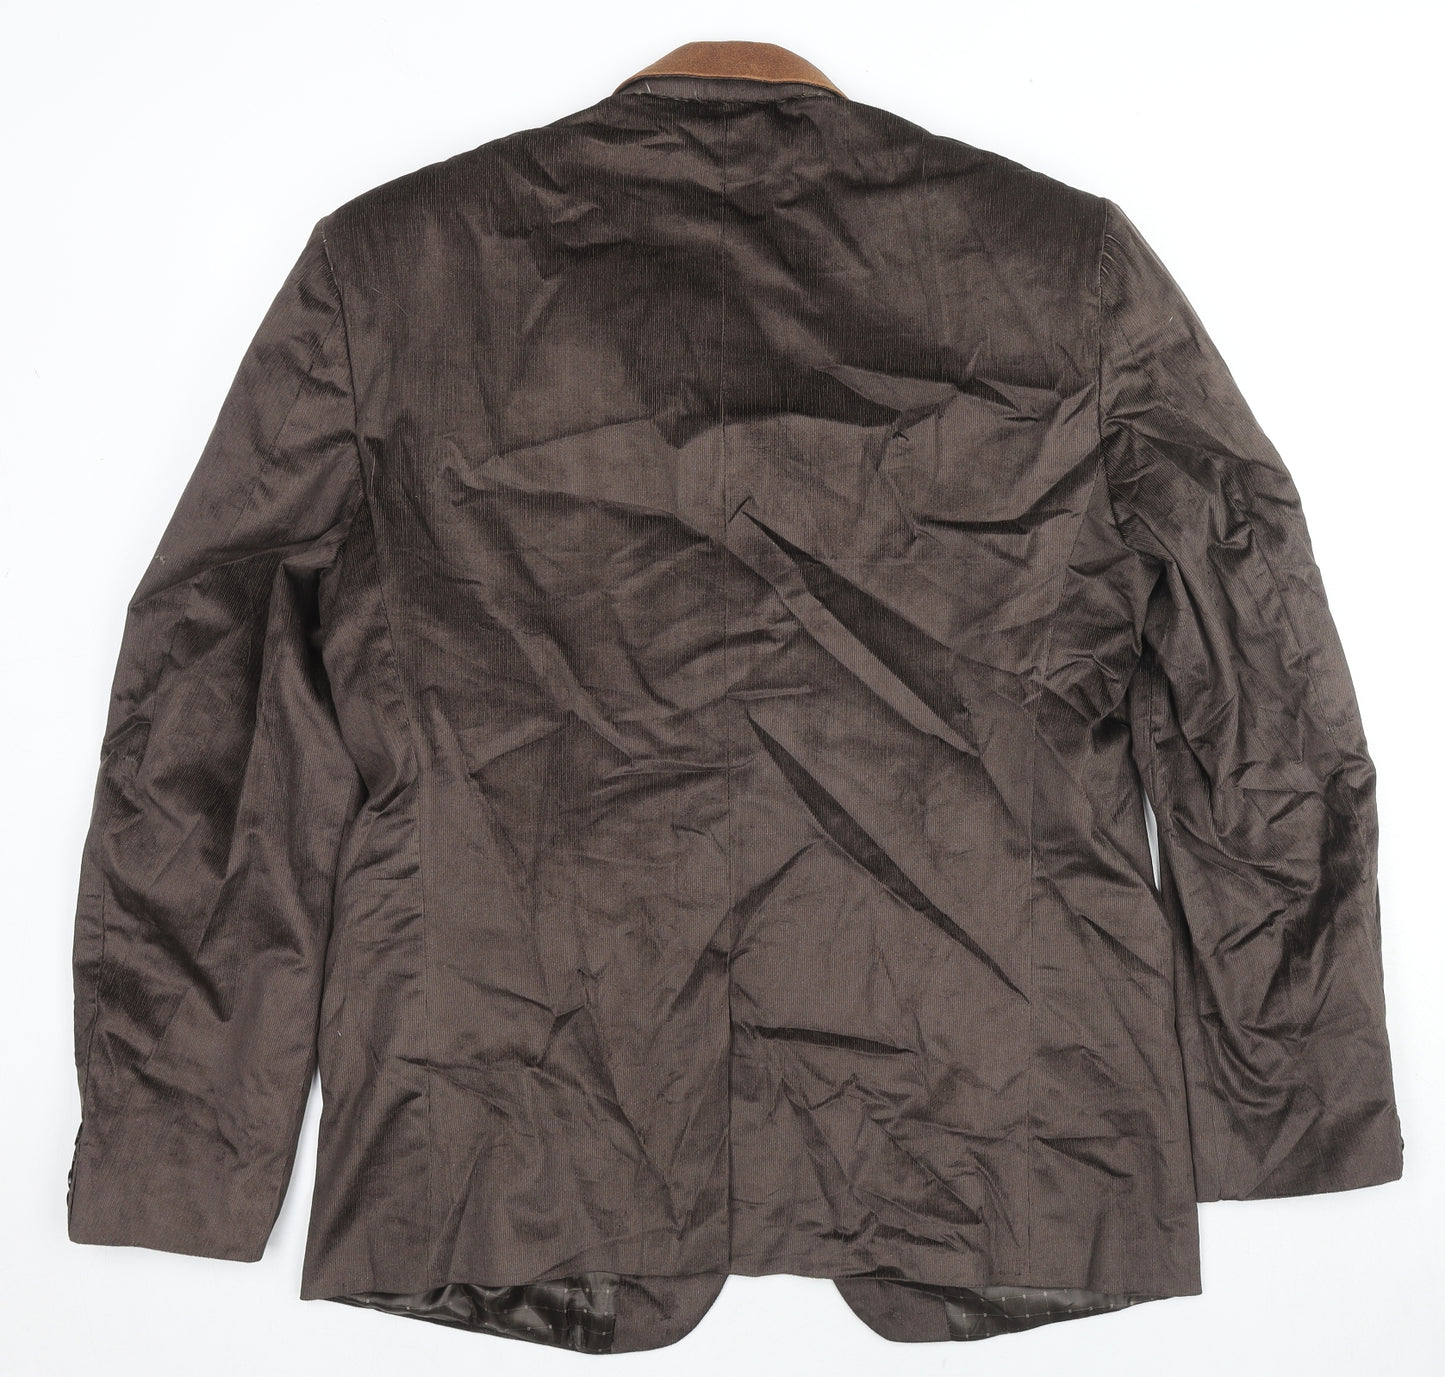 Arjay Mens Brown Polyester Jacket Blazer Size 44 Regular